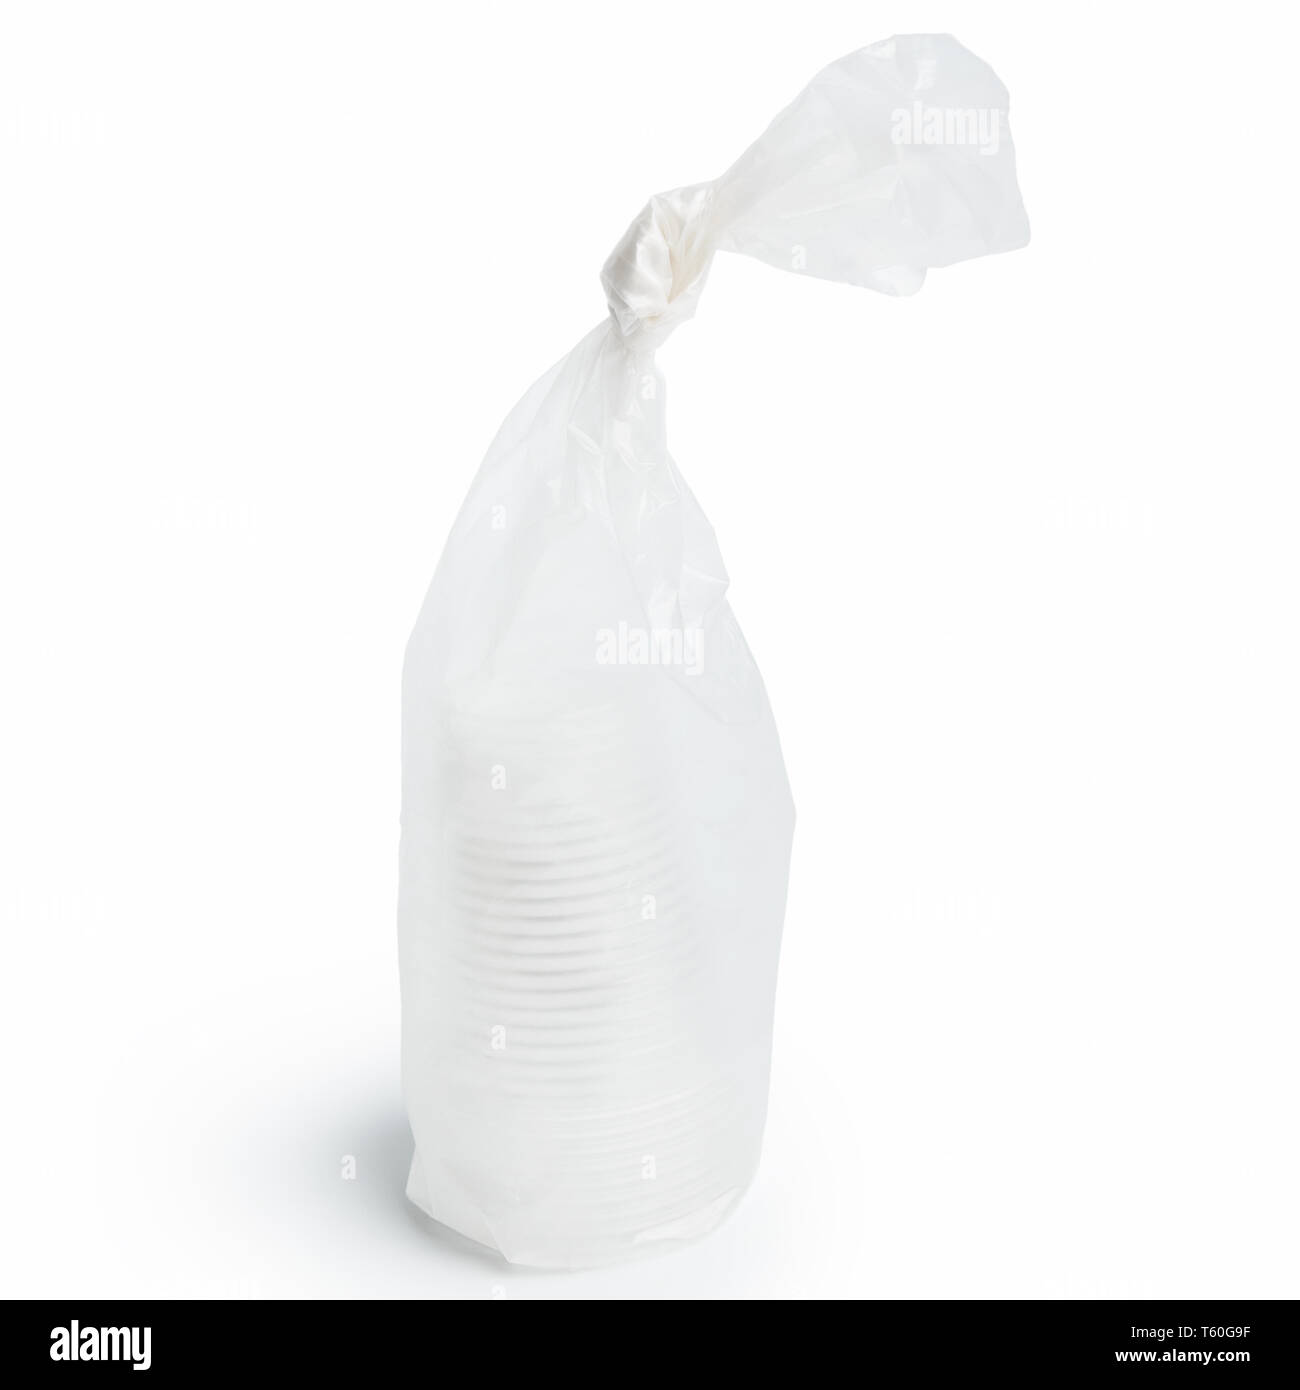 https://c8.alamy.com/comp/T60G9F/tied-plastic-bag-on-white-T60G9F.jpg